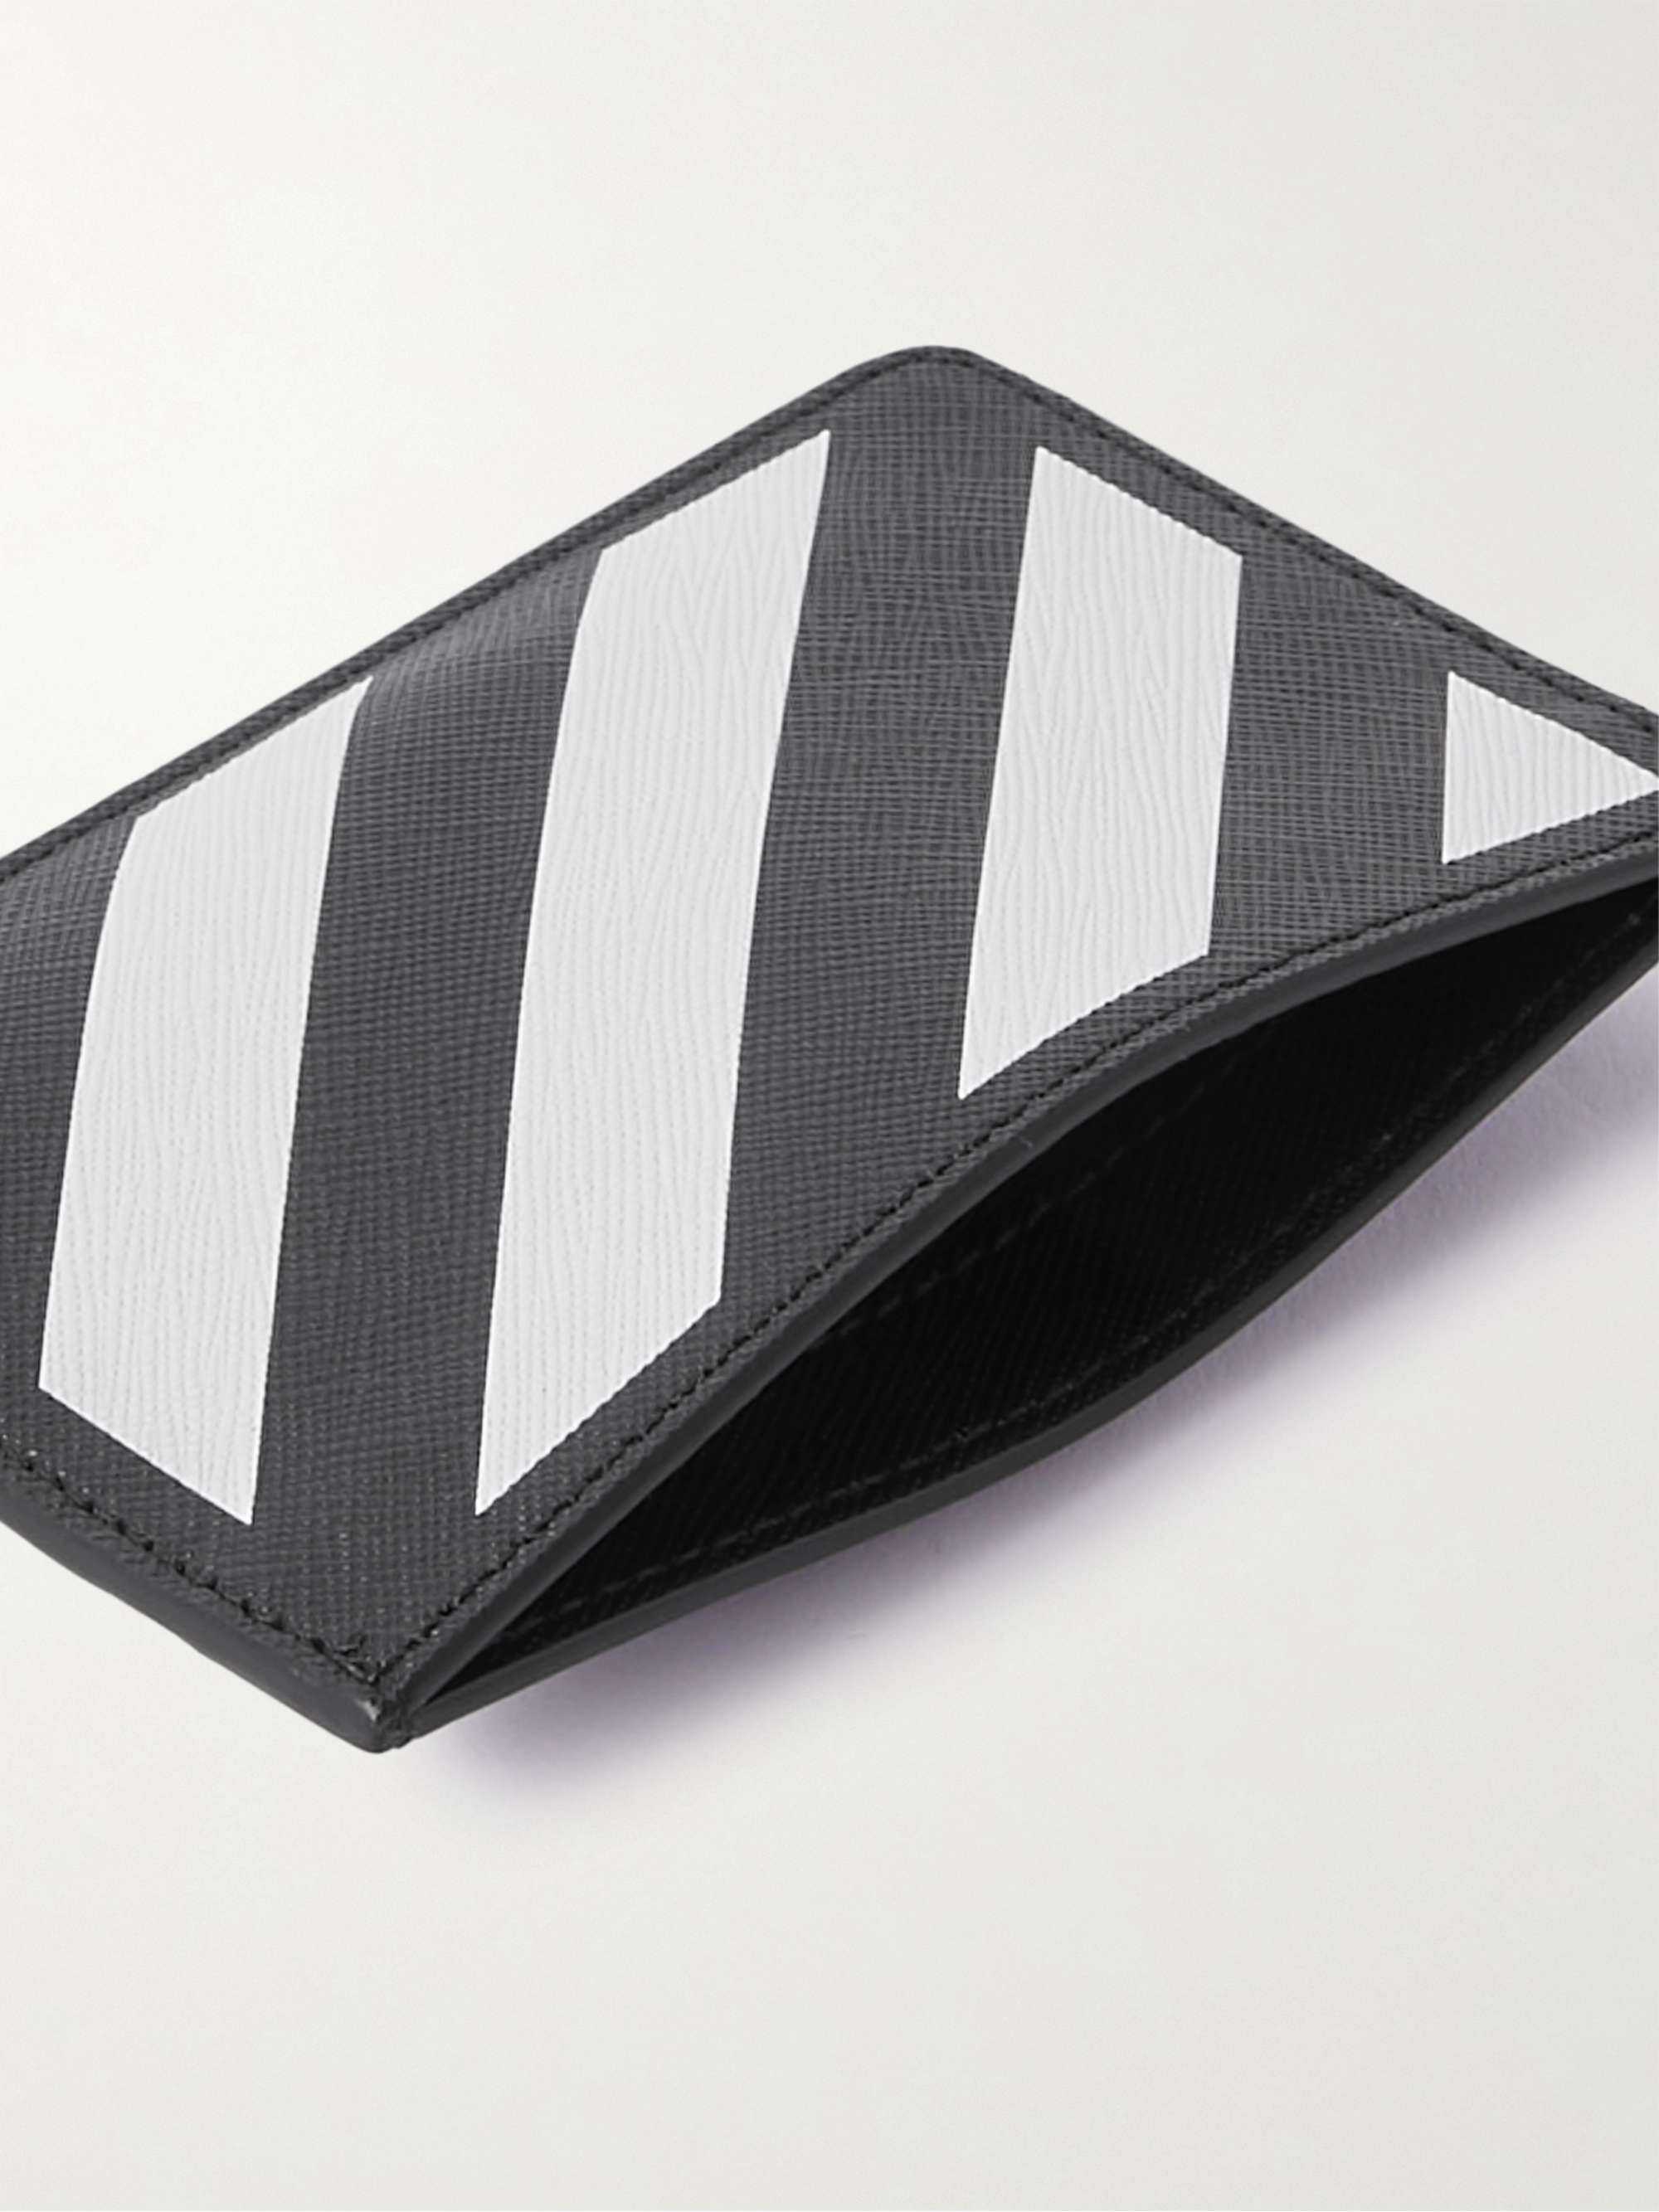 OFF-WHITE Striped Logo-Print Saffiano Leather Cardholder